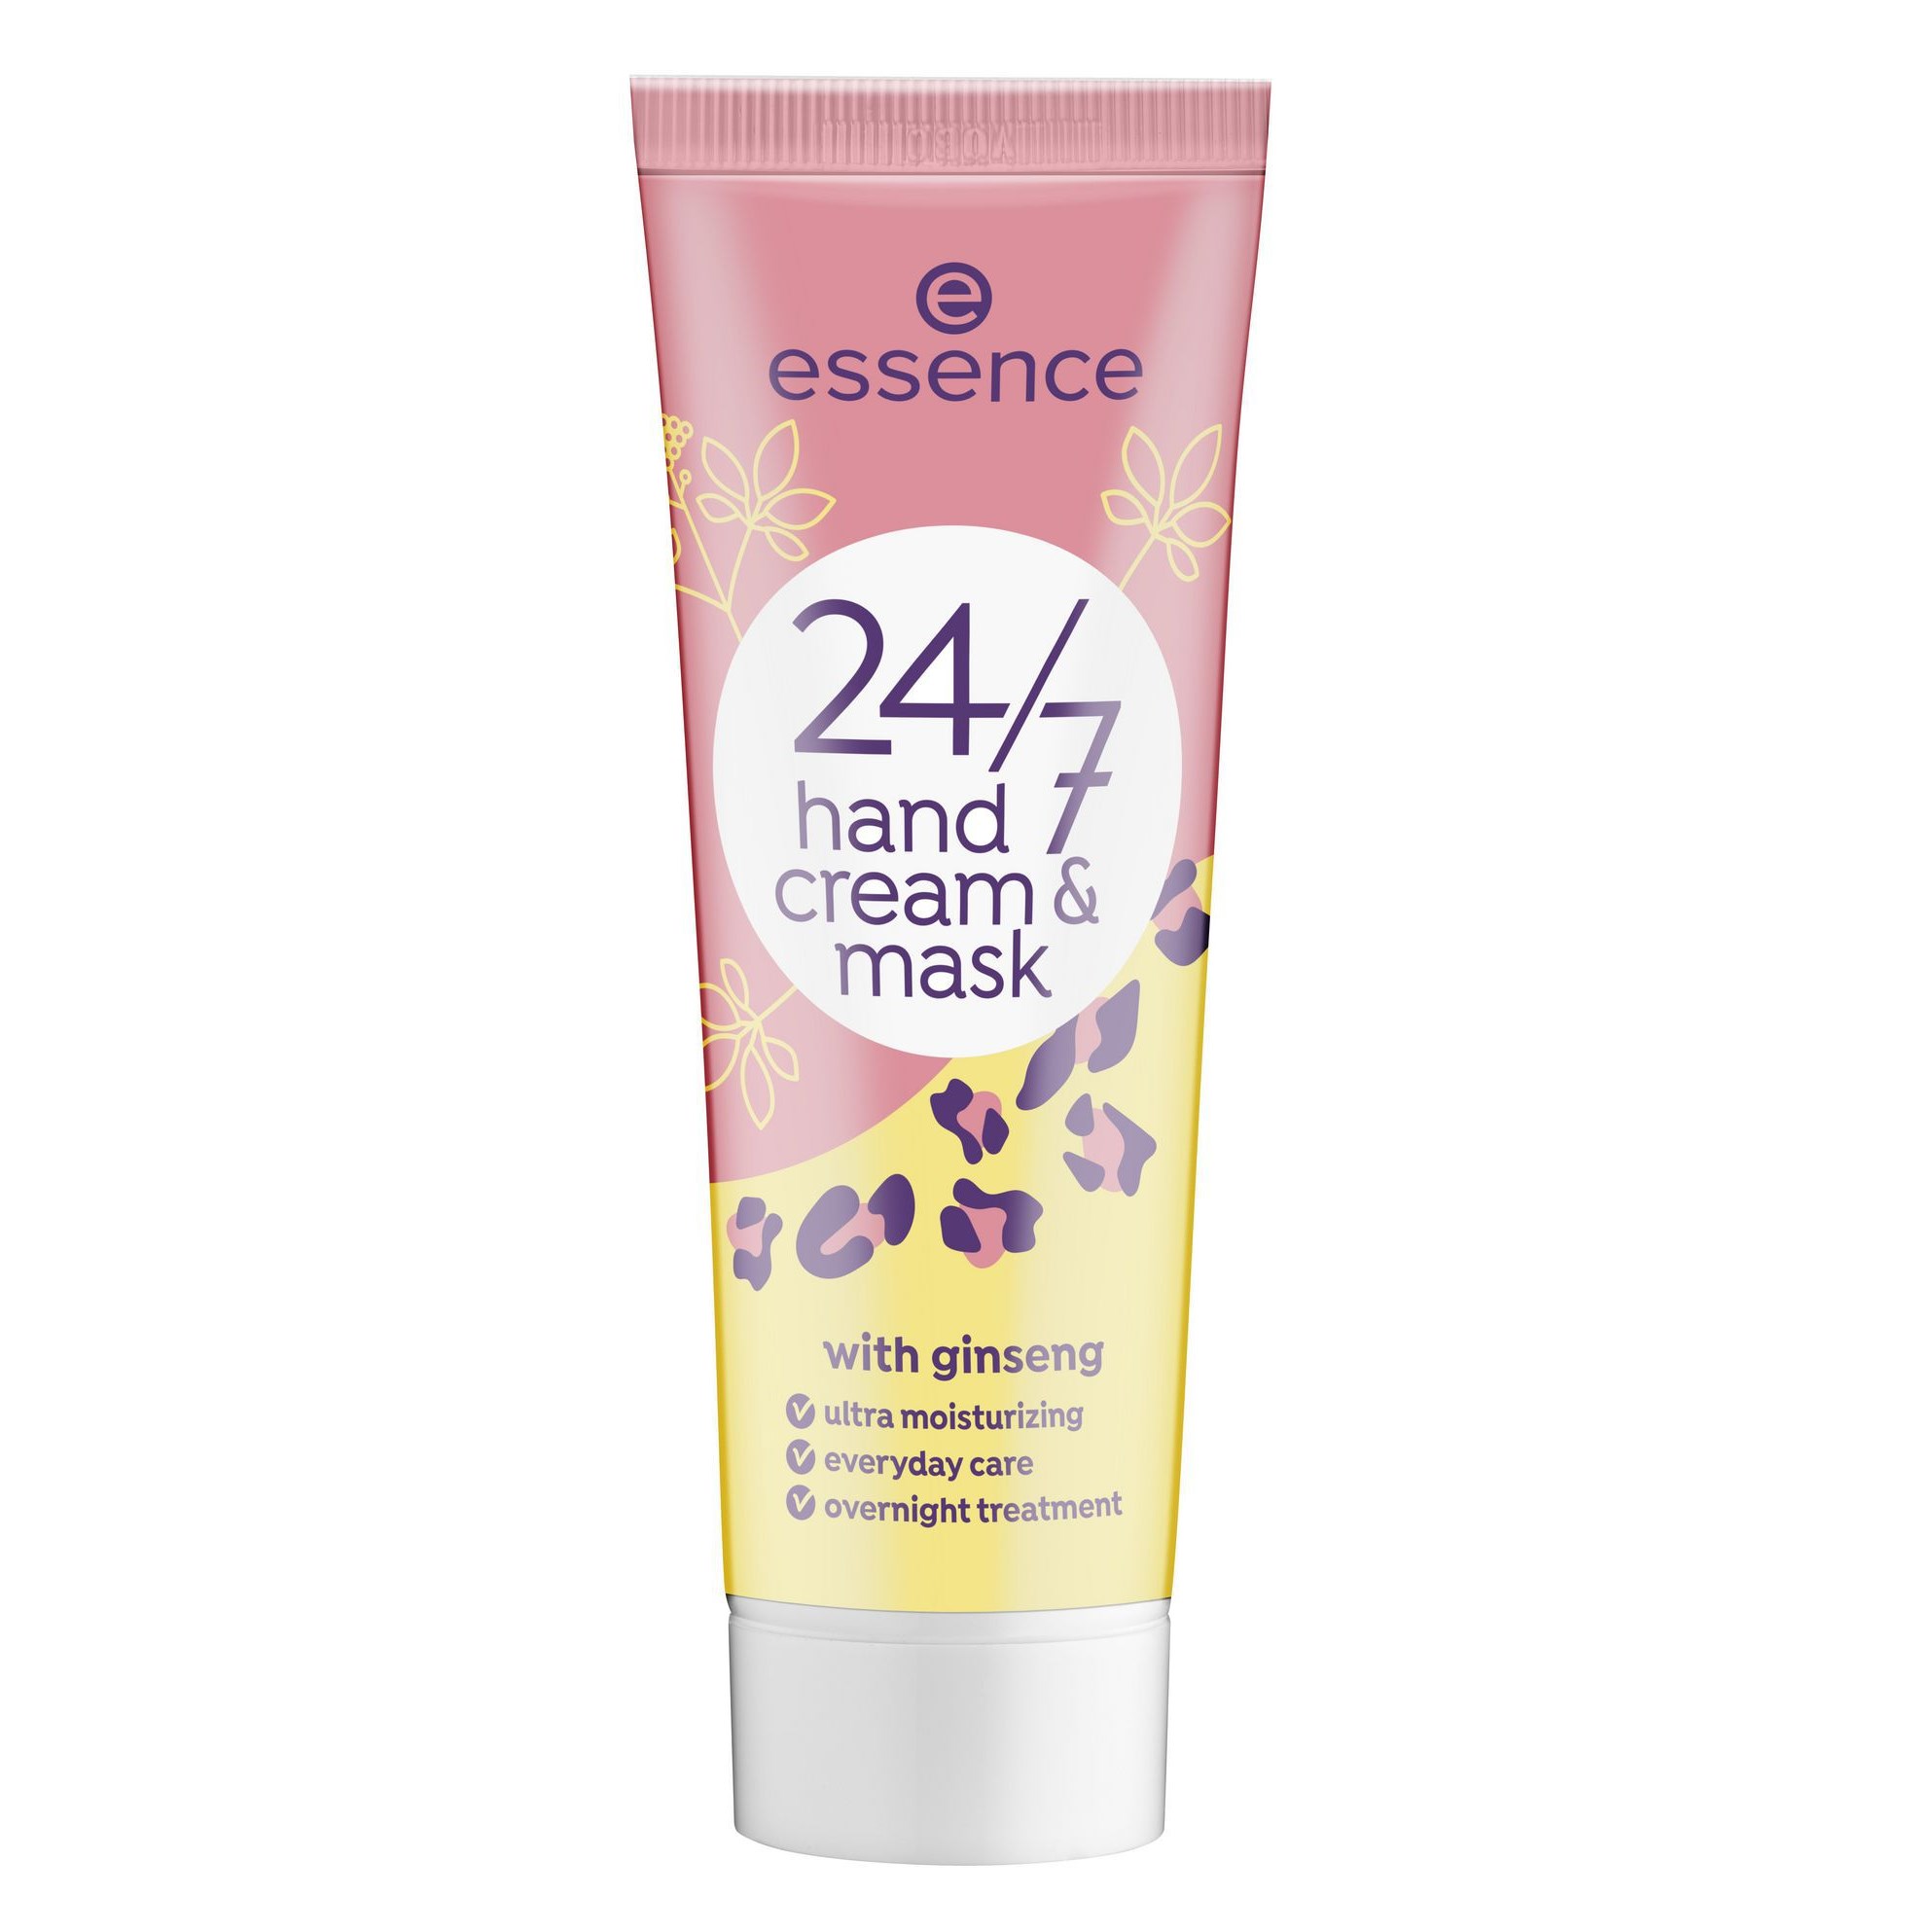 essence 24/7 hand cream & mask